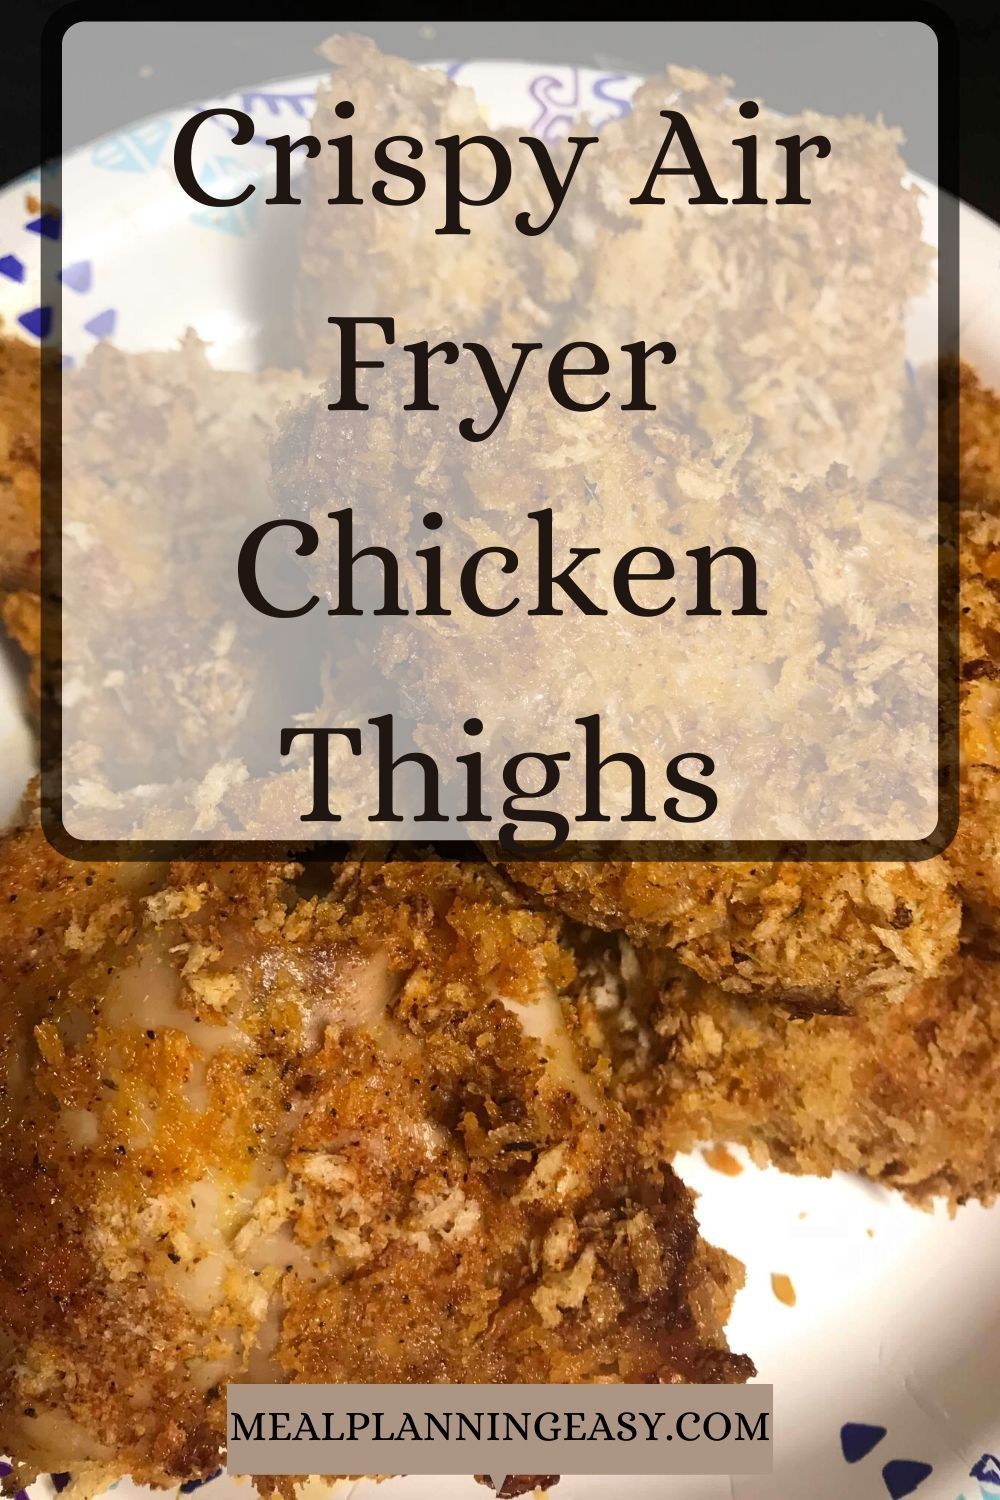 19 air fryer recipes chicken boneless panko ideas